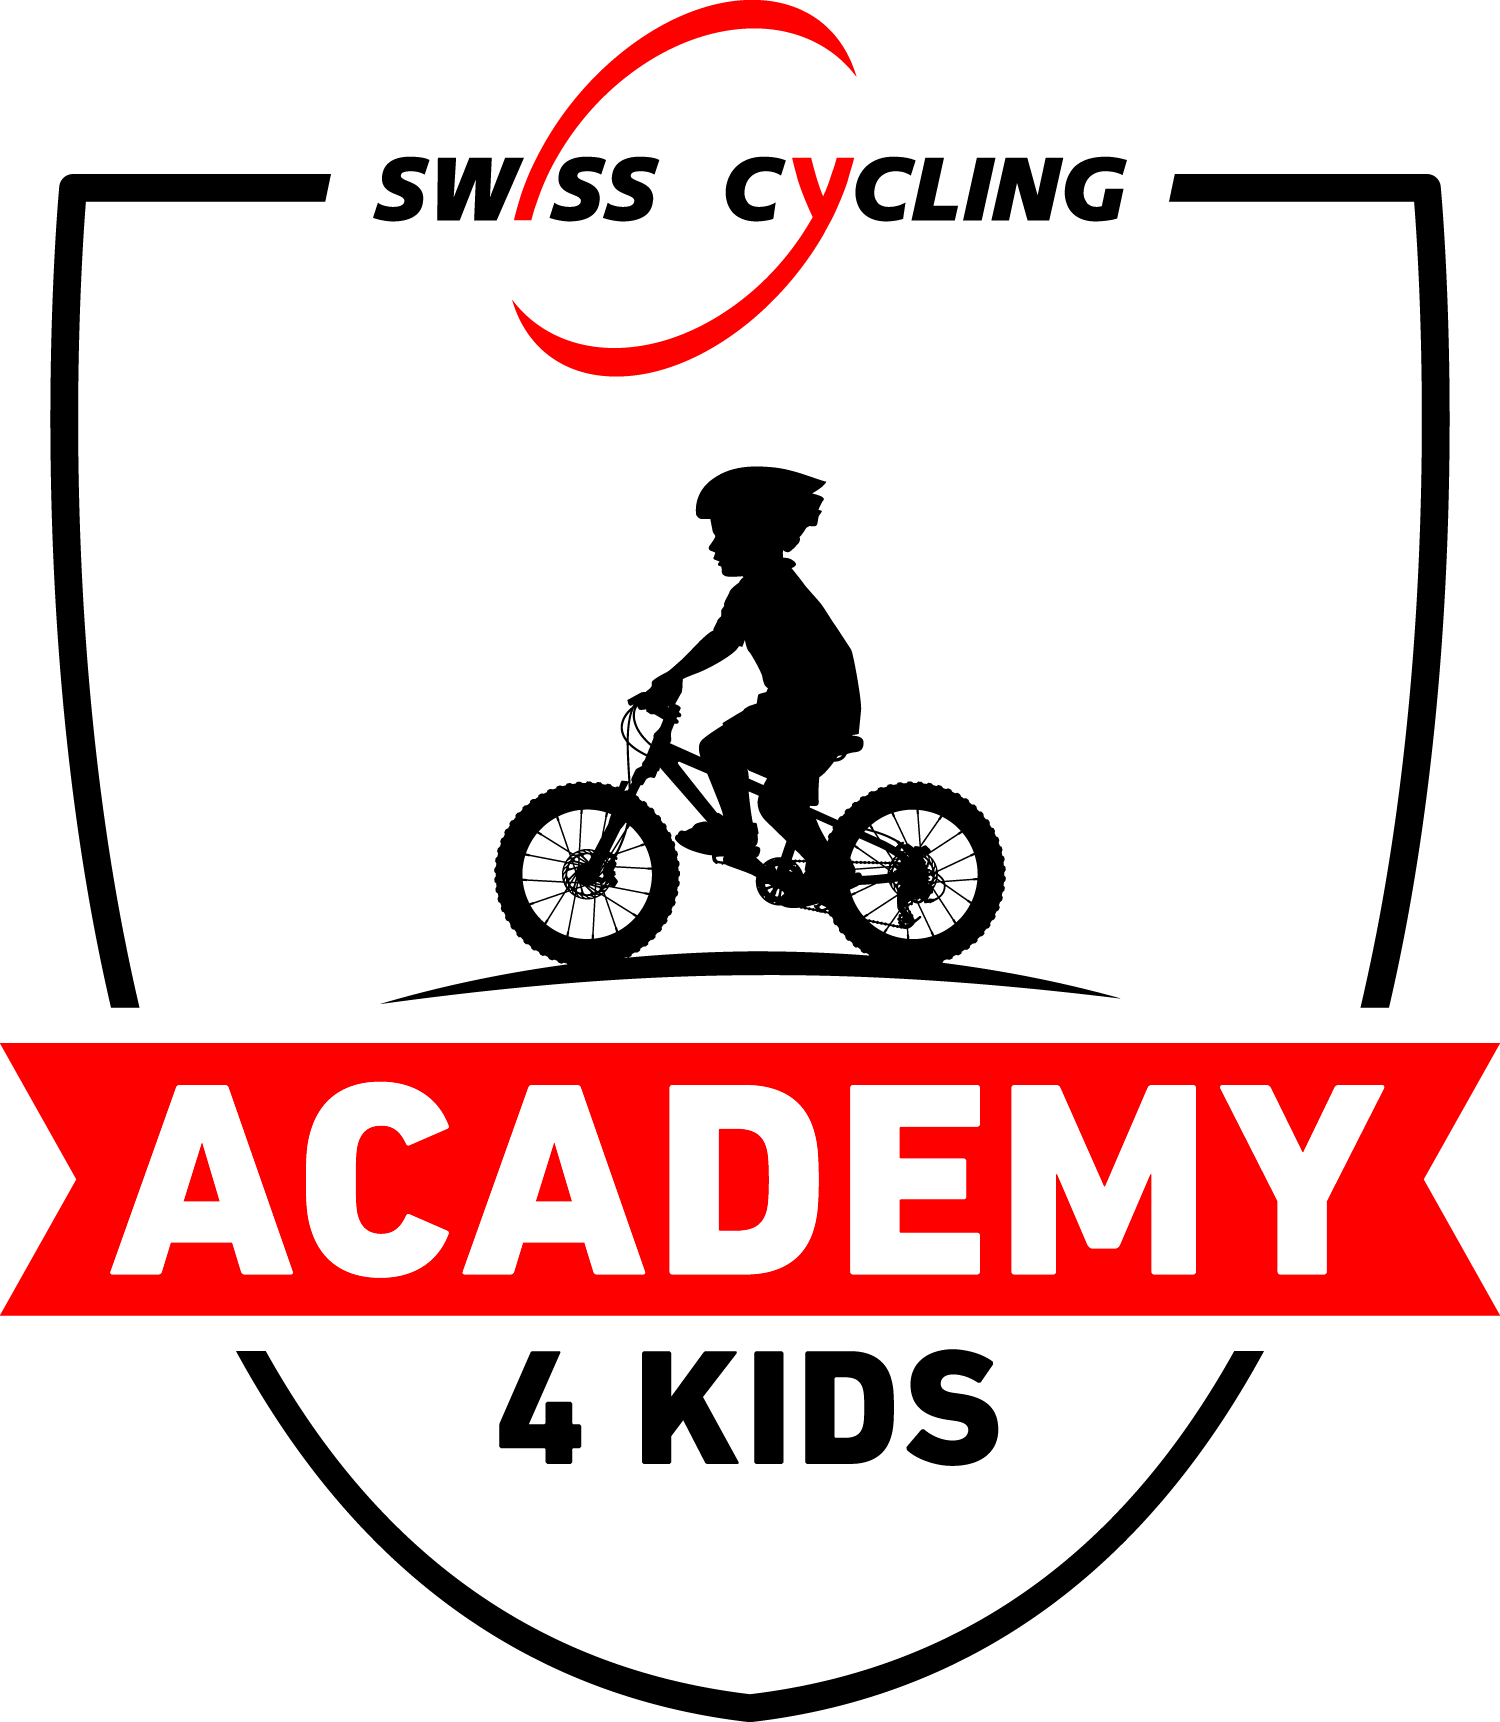 Swiss Cycling Academy 4 Kids